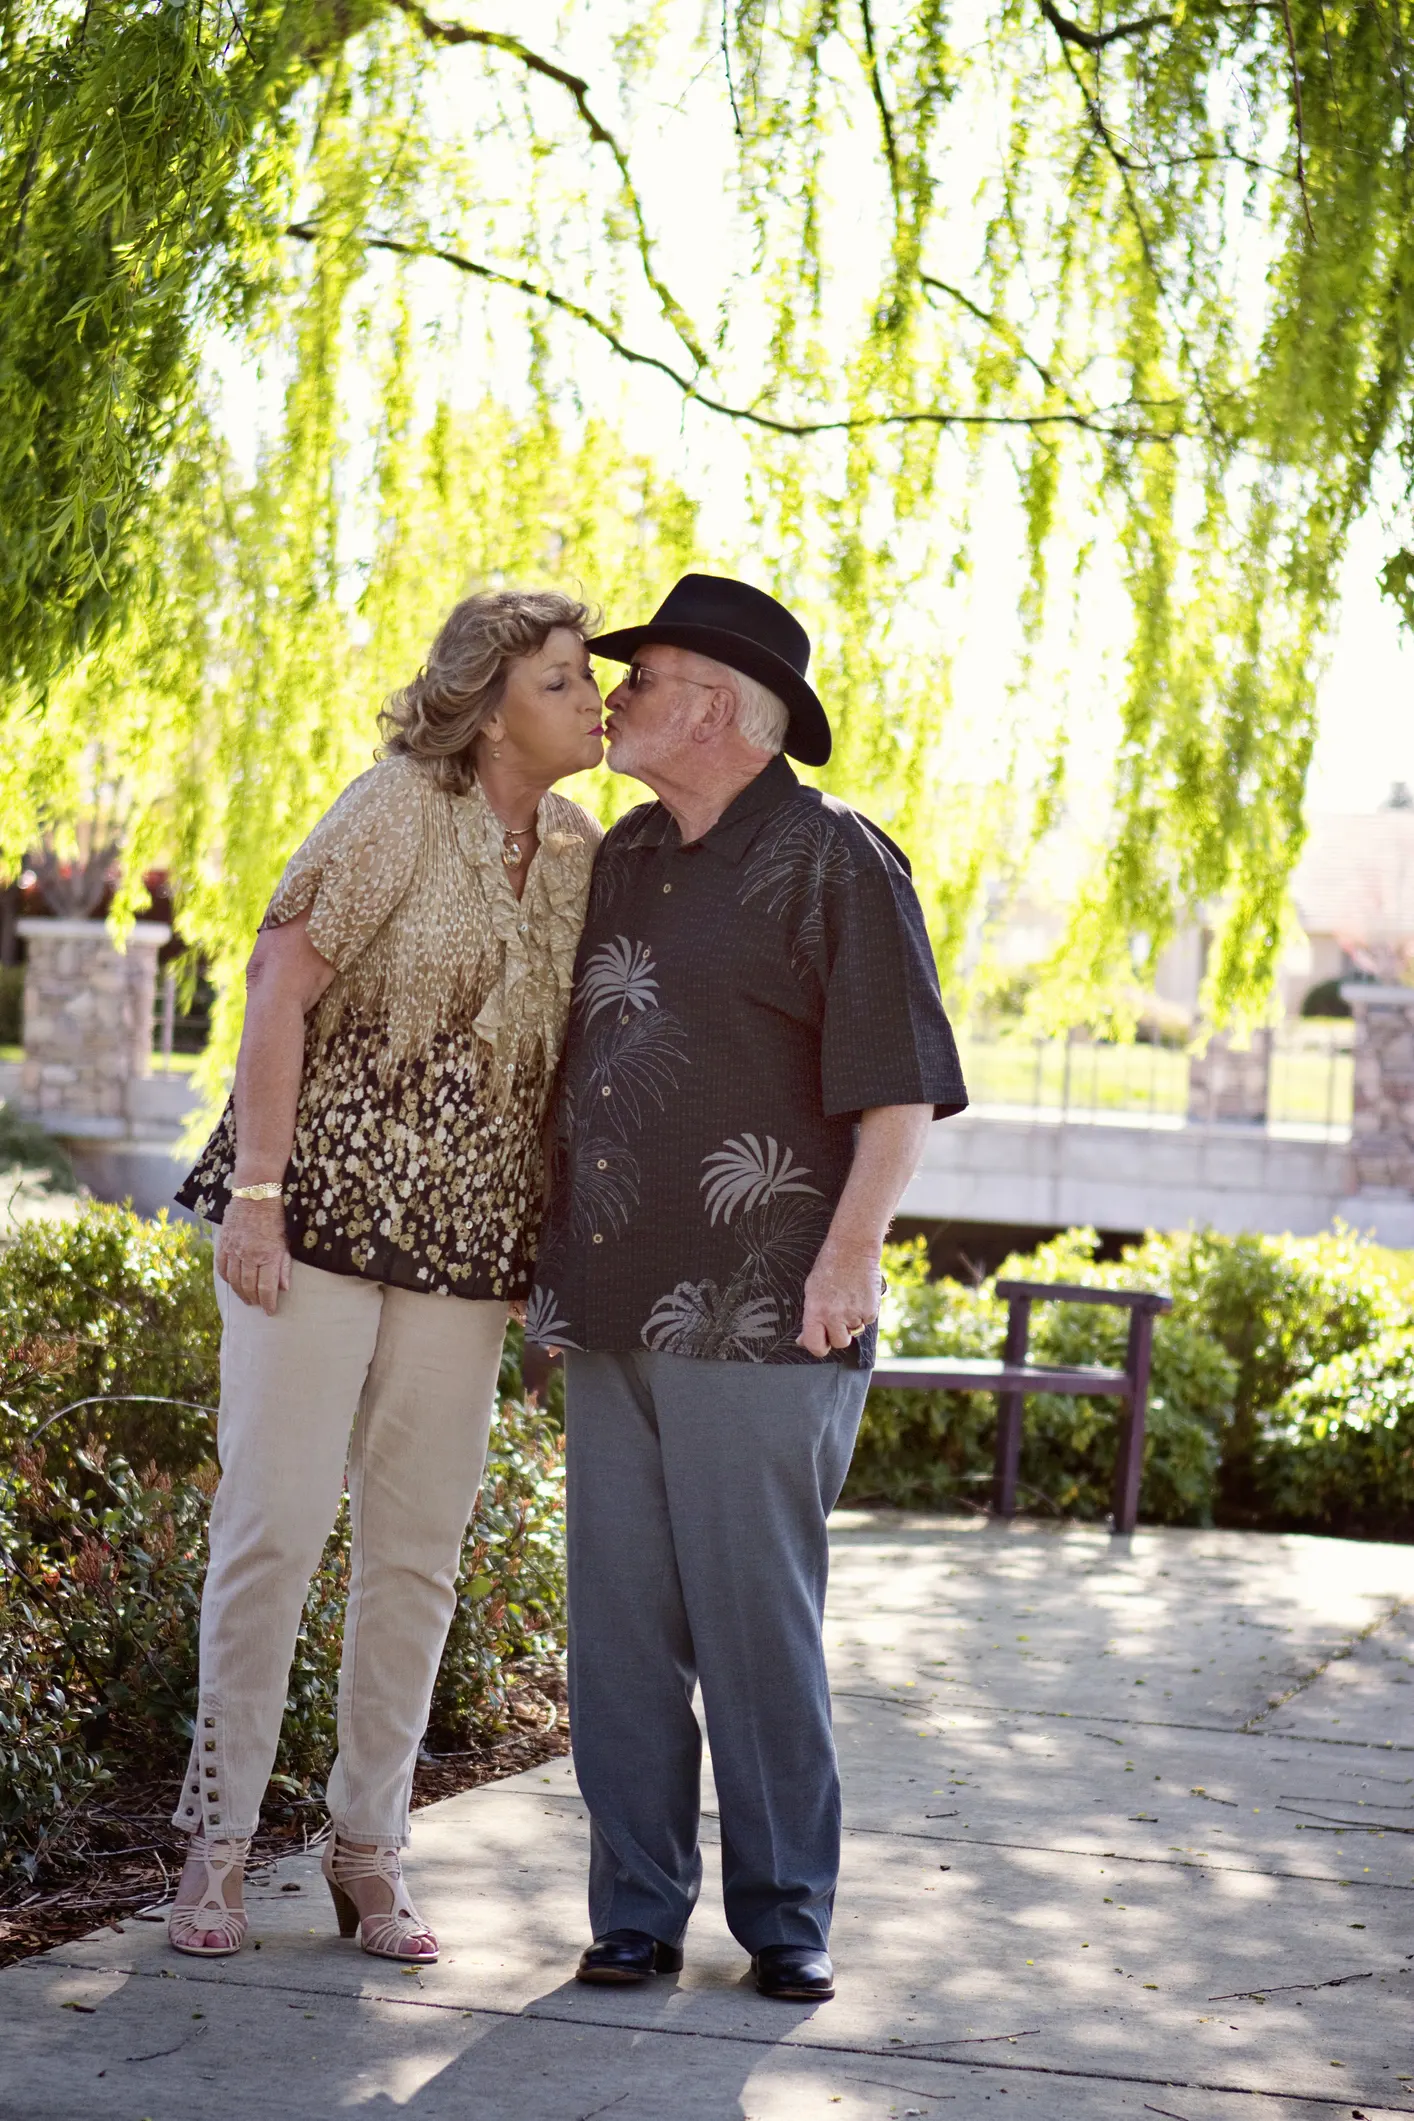 Short Term Memory Care for Senior Residents - Ridgeview Village Texas